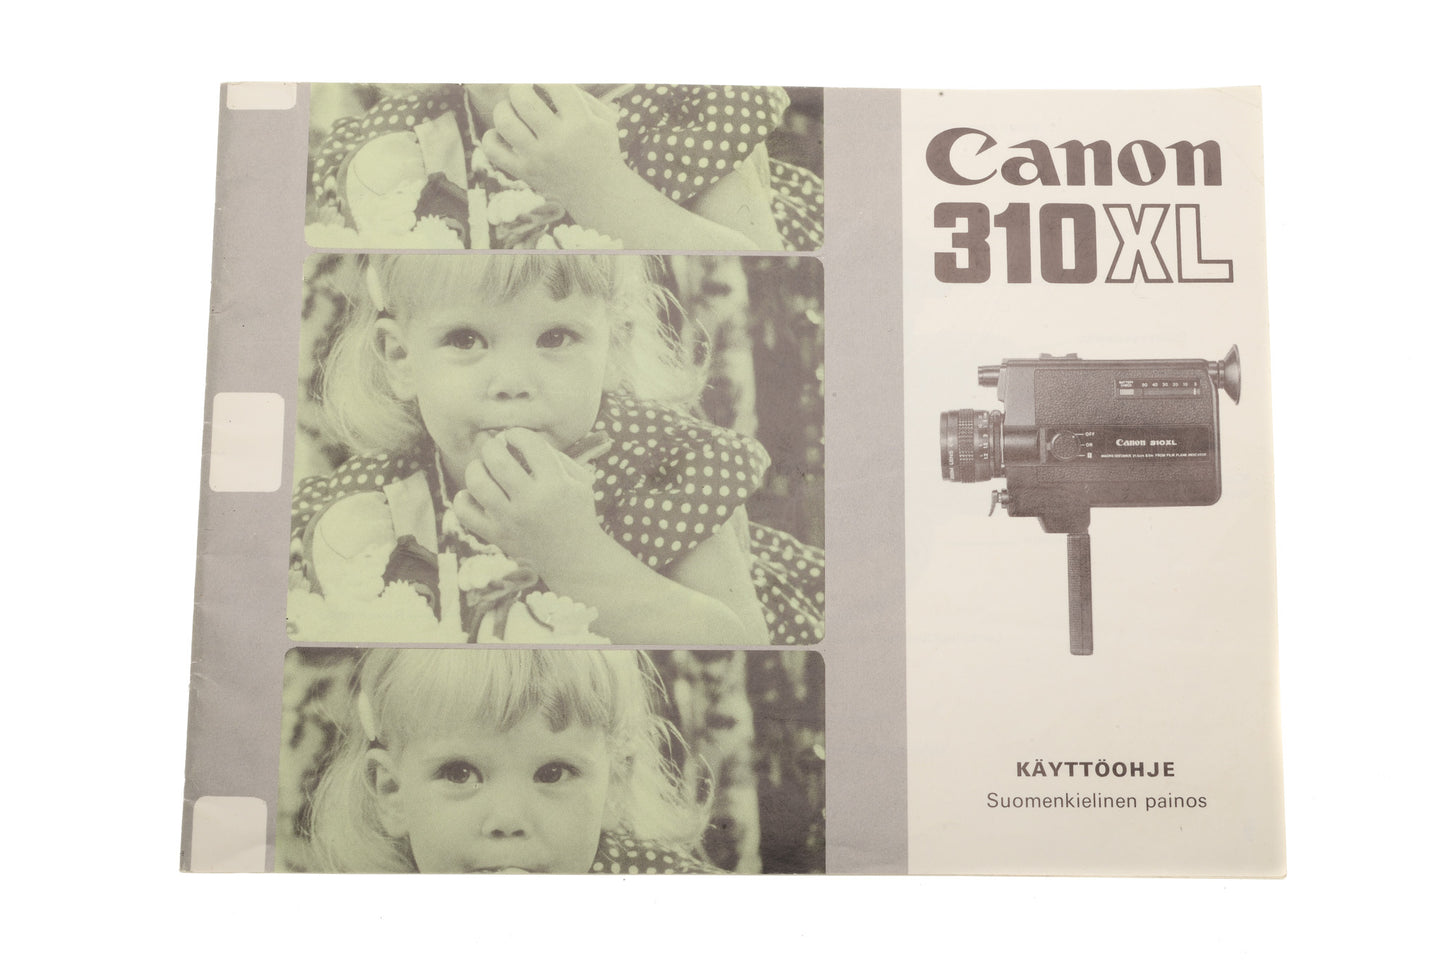 Canon 310XL Instructions